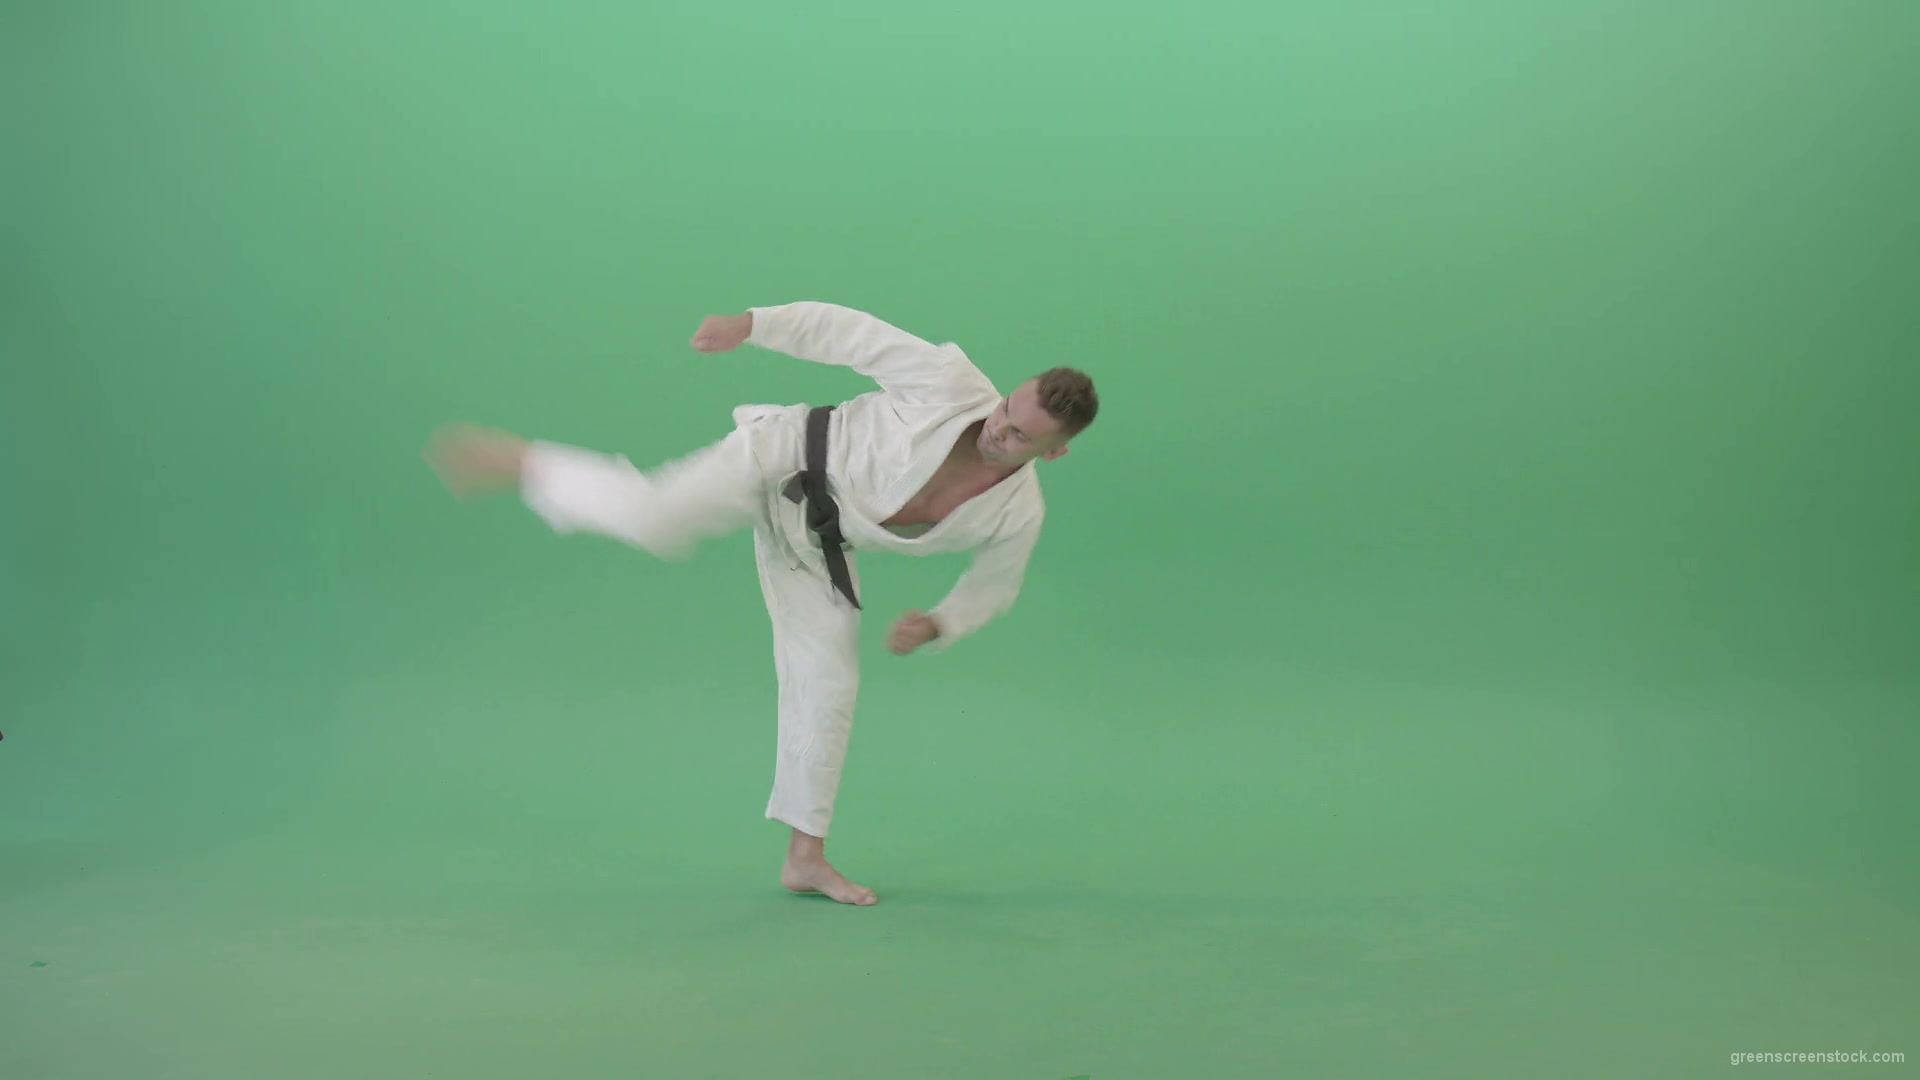 Mortal-Kombat-by-Karate-Ju-Jutsu-trainer-sportsman-isolated-on-green-screen-4K-Video-Footage-1920_006 Green Screen Stock